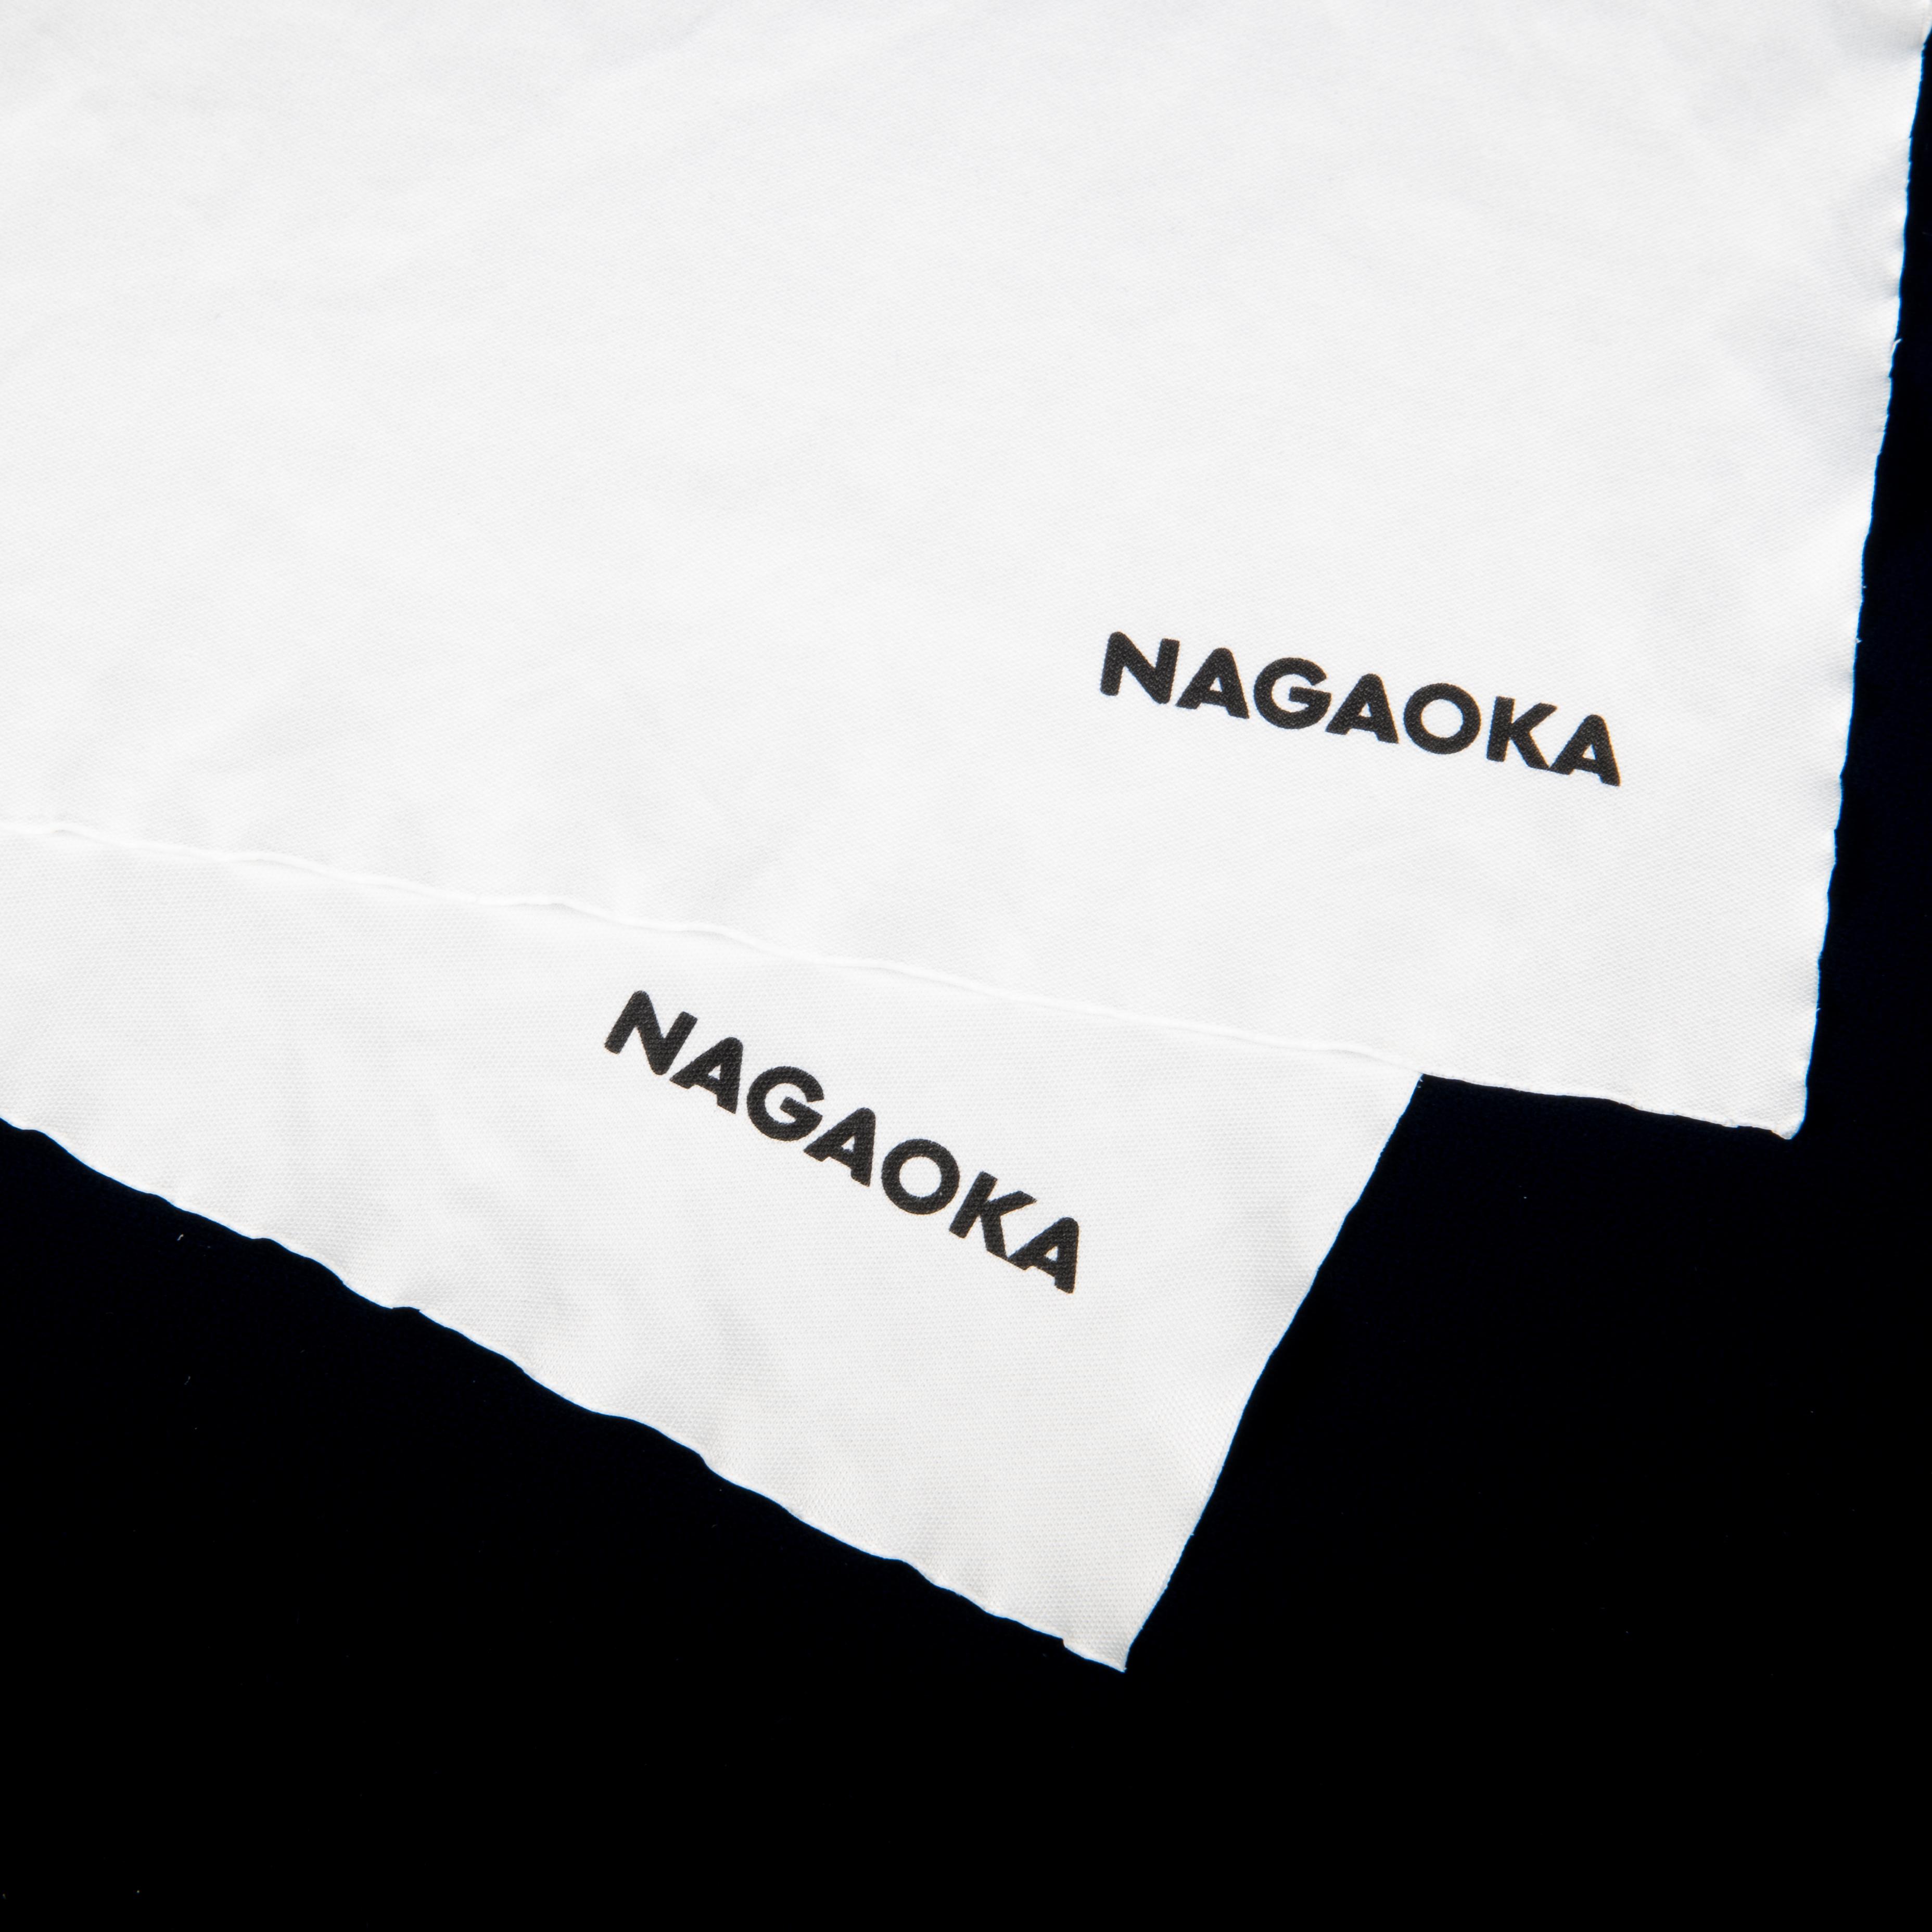 NAGAOKA レコード盤、レコード針クリーナーセット SP558 CL120 AM8012